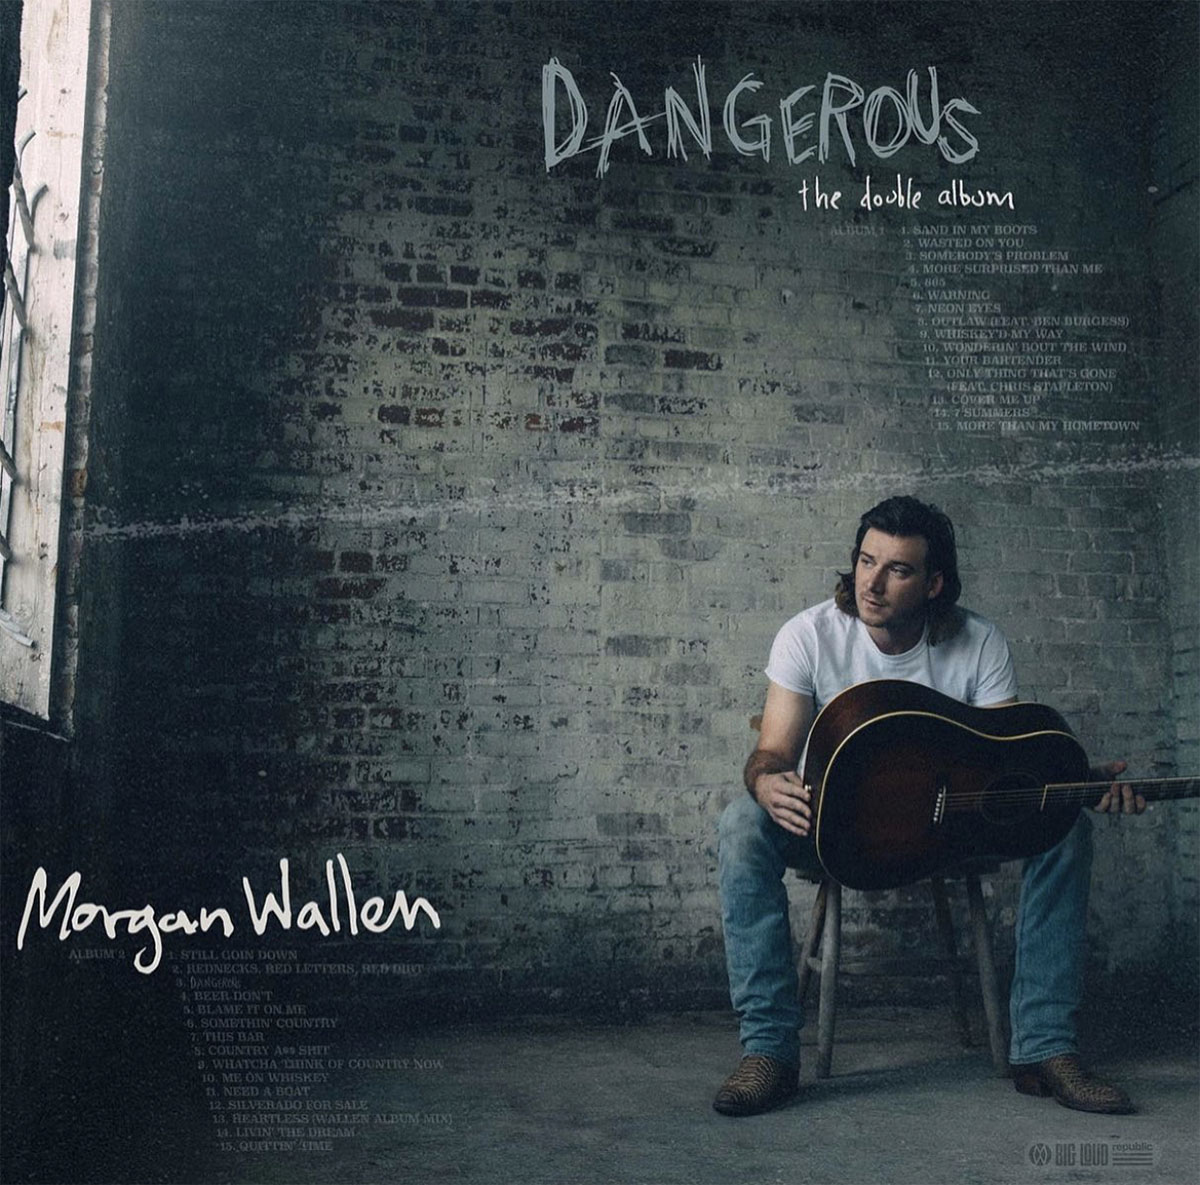 Morgan Wallen Releases Three Brand New Songs Ahead of 'Dangerous, the double album'